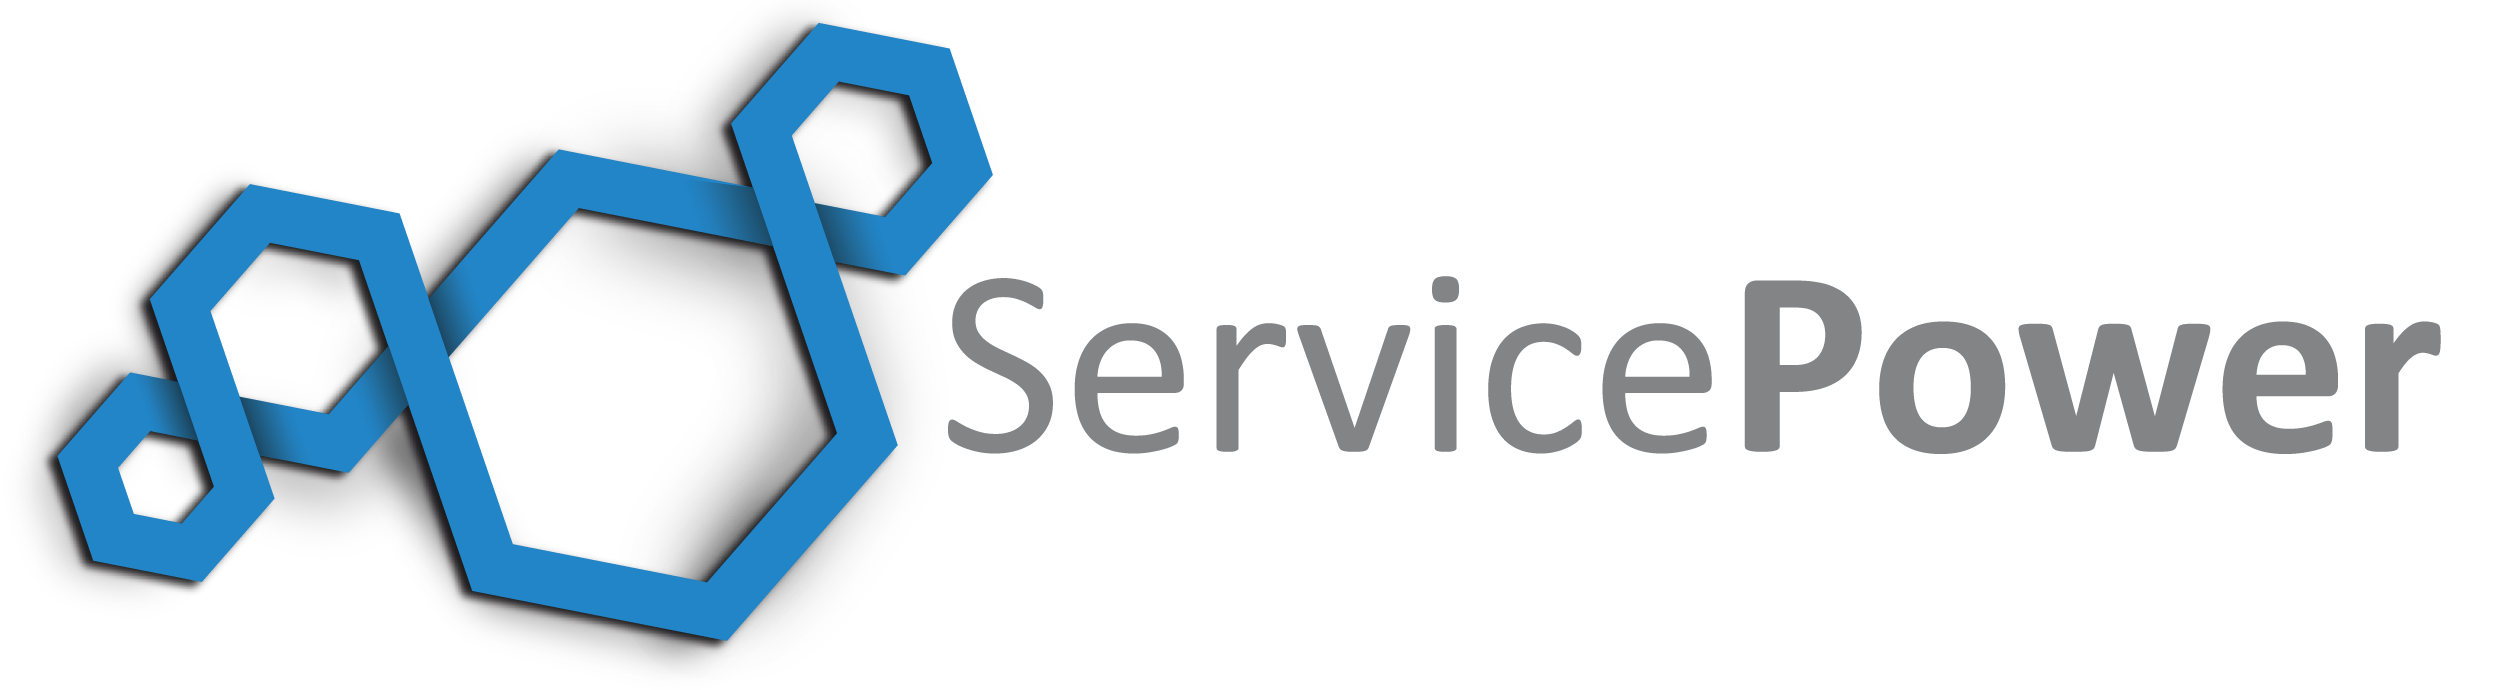 Servicepower Technologies